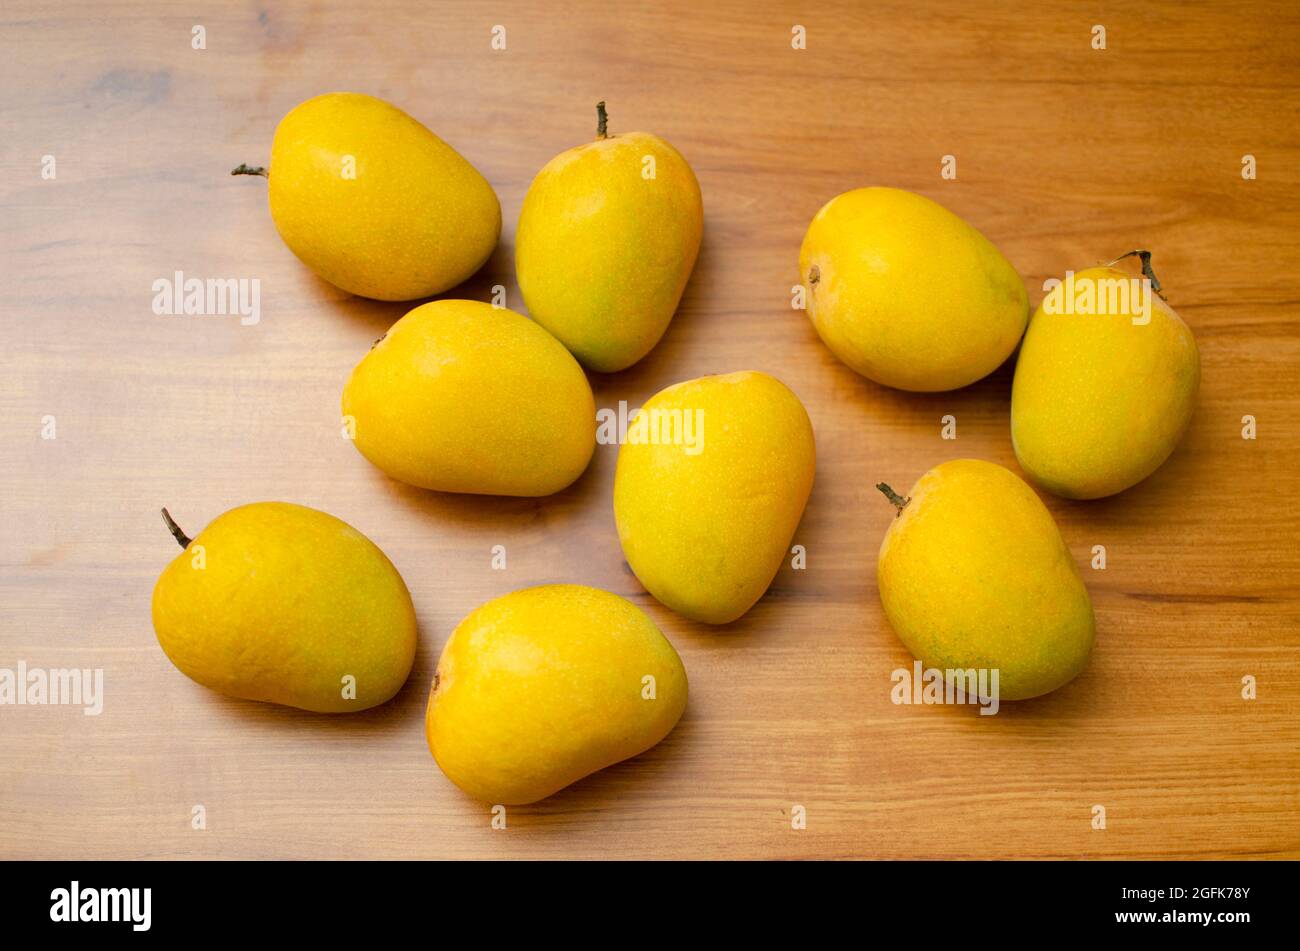 Bunch of 9 Alphonso ripe yellow mangoes on table. Studion shot Stock Photo